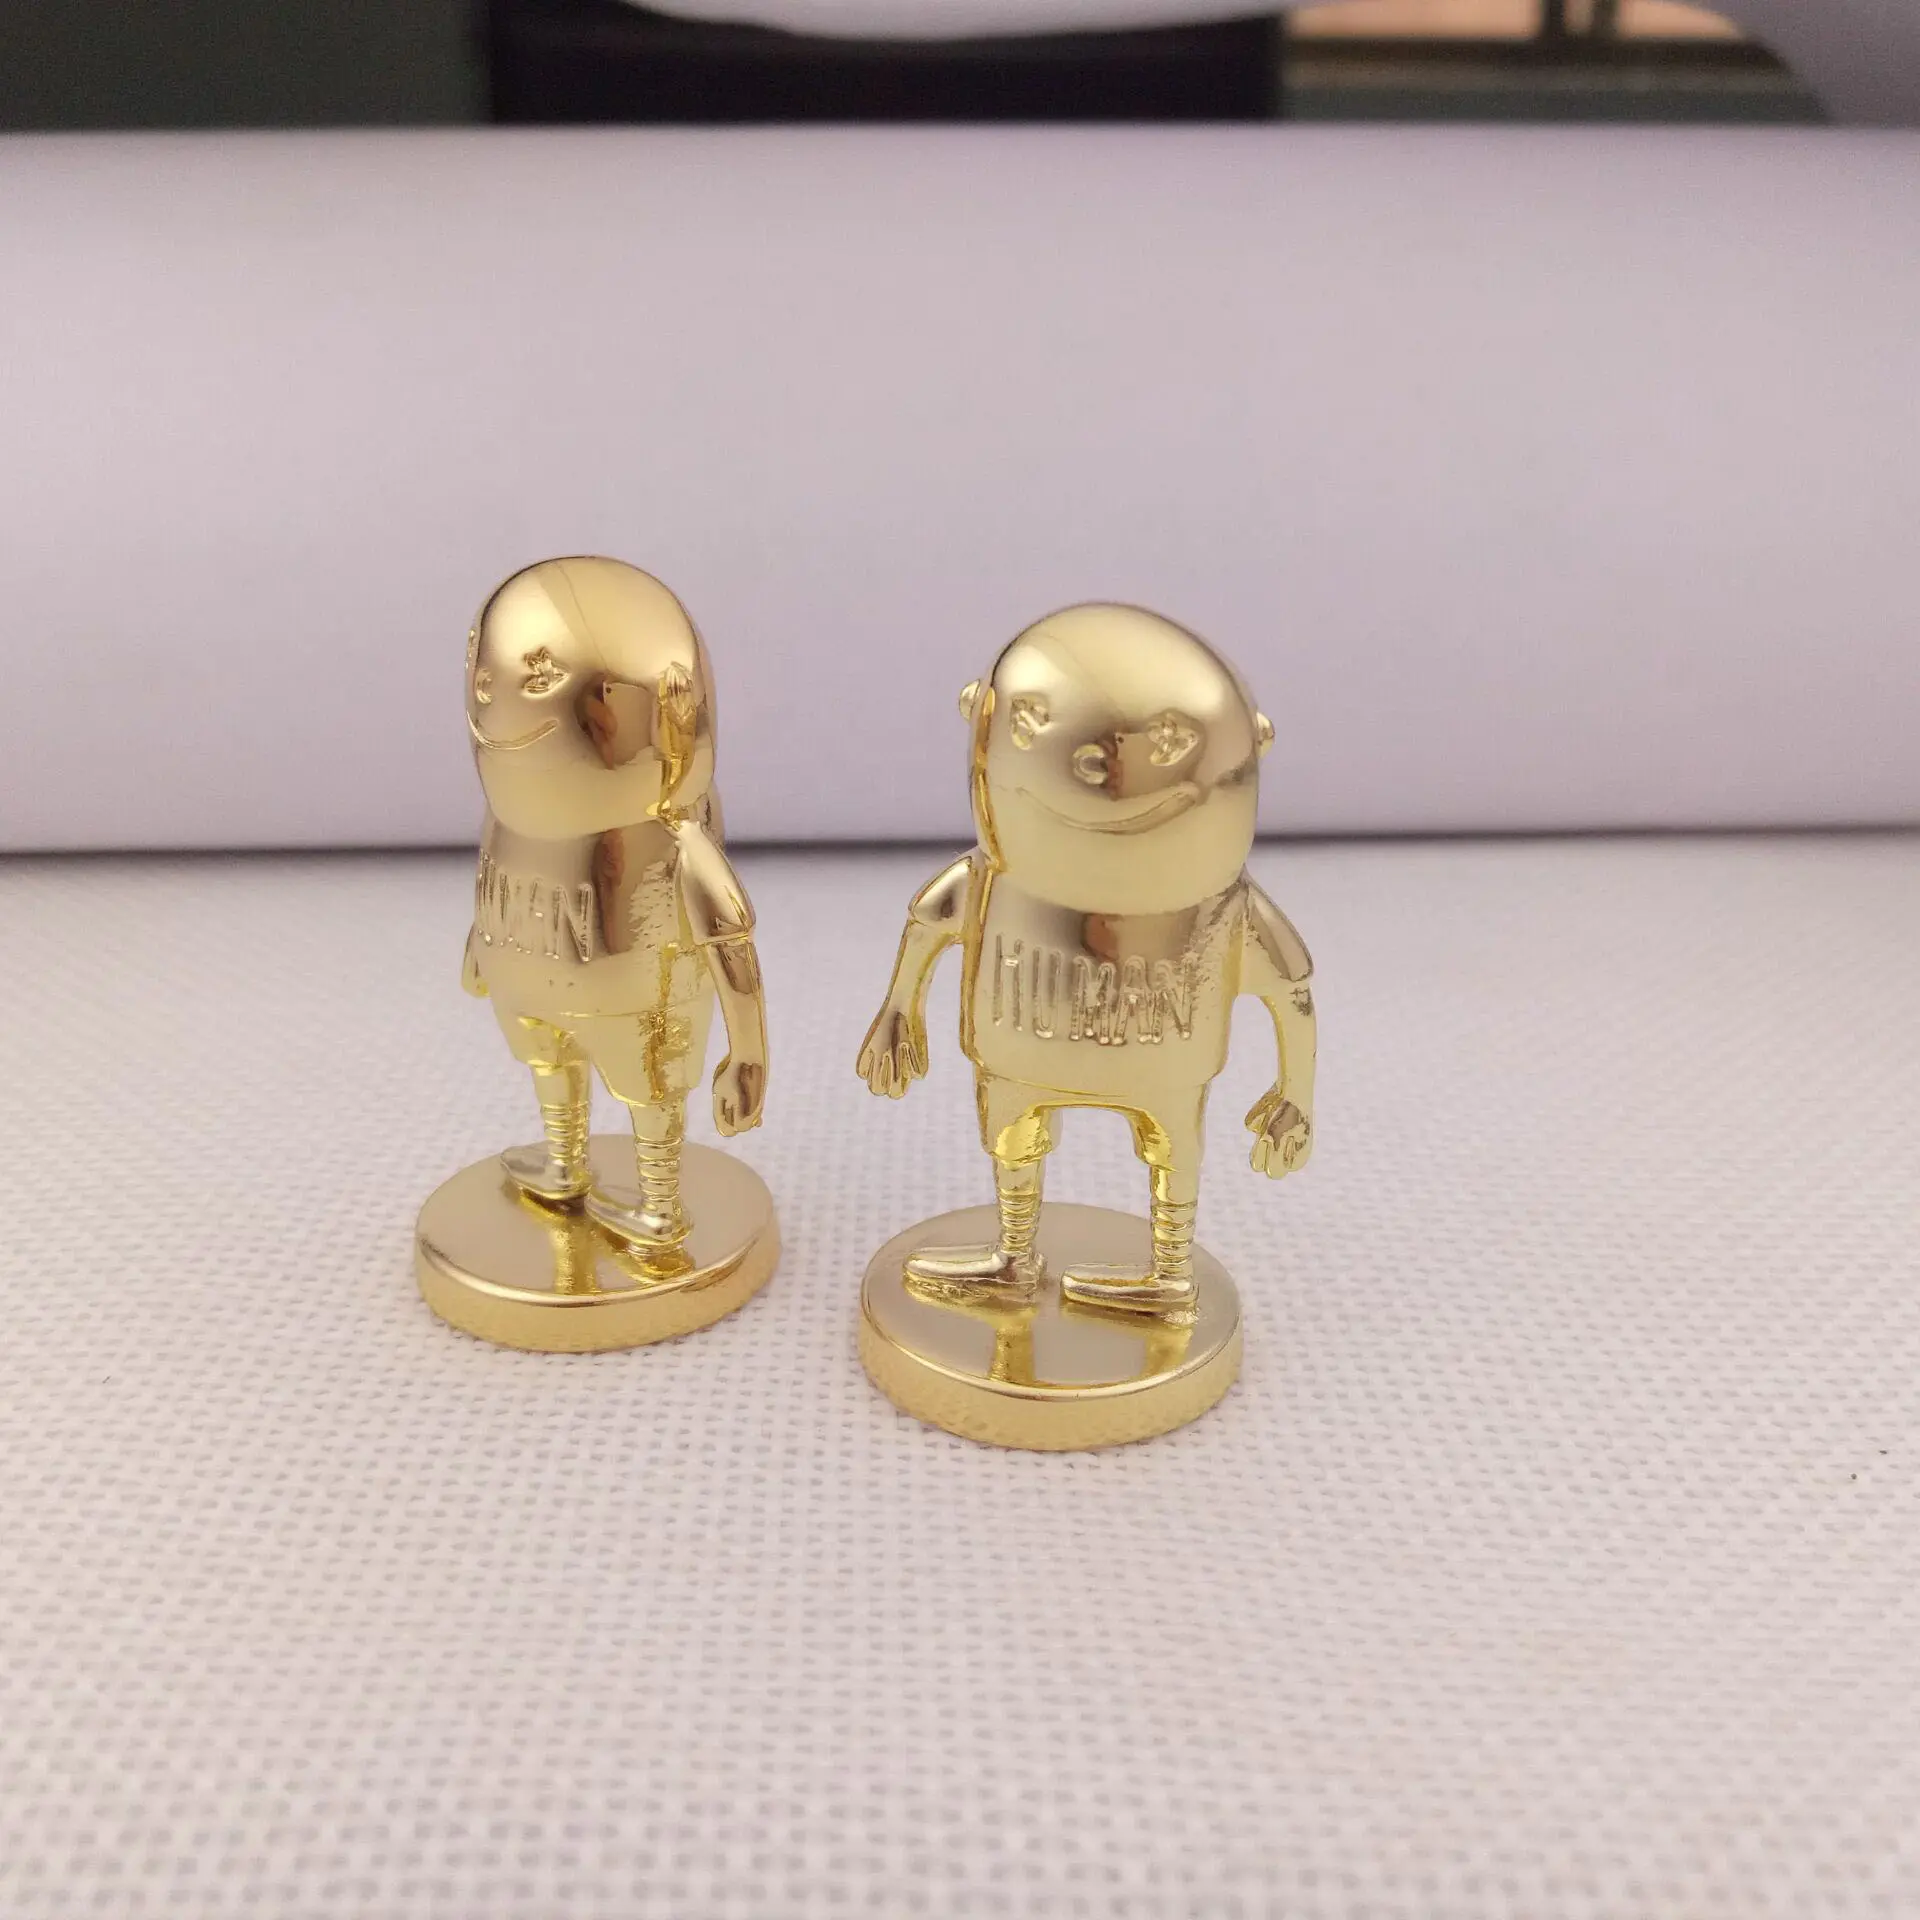 Fan made custom home office interior decoration golden metal japanese movie statue for desk